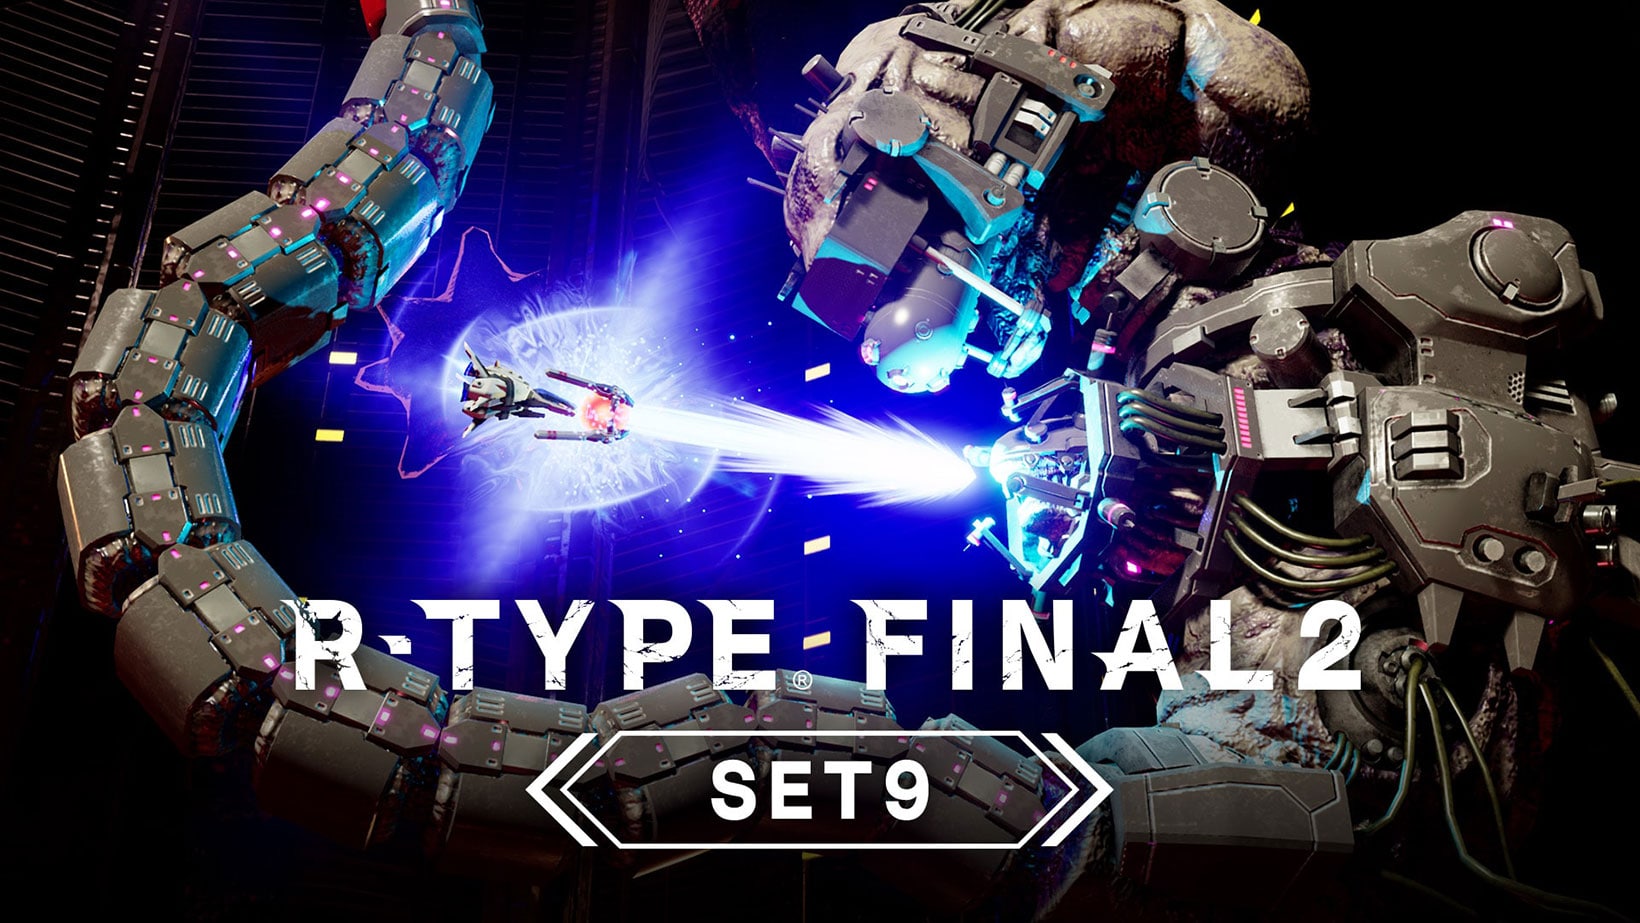 DLC "R-Type Final 2: Homage Stage Set 9" goes live